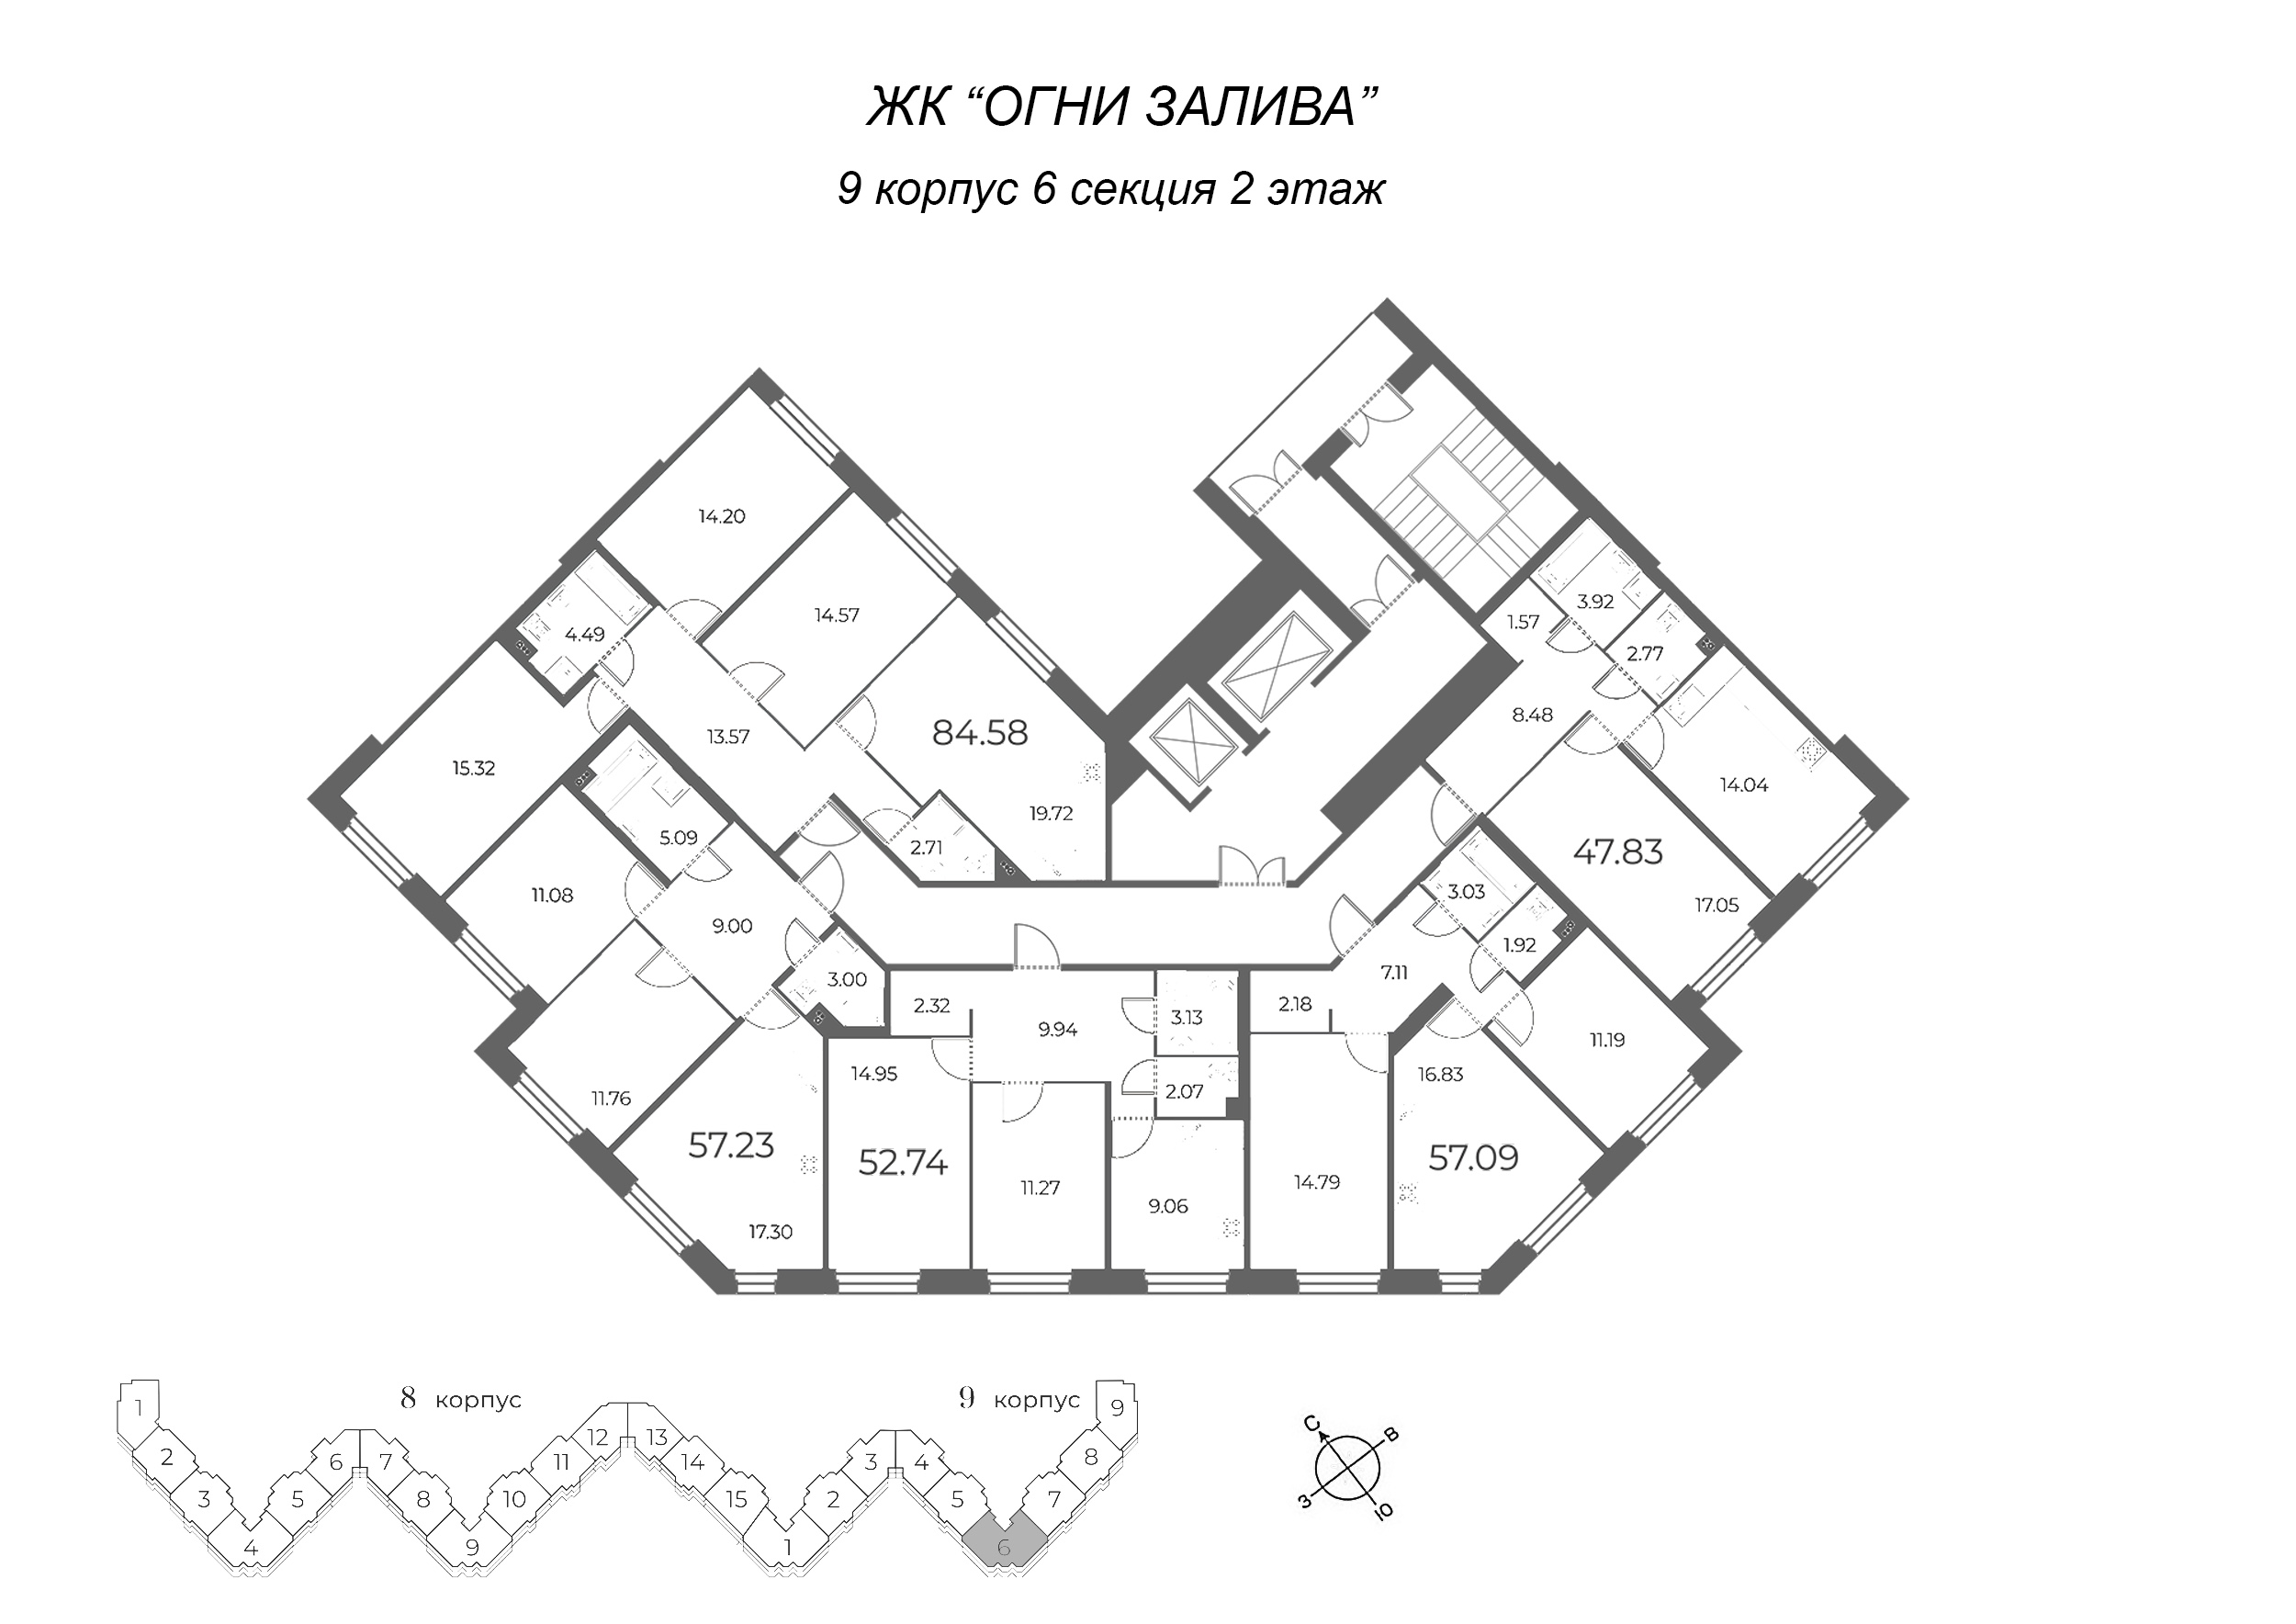 4-комнатная (Евро) квартира, 84.58 м² - планировка этажа